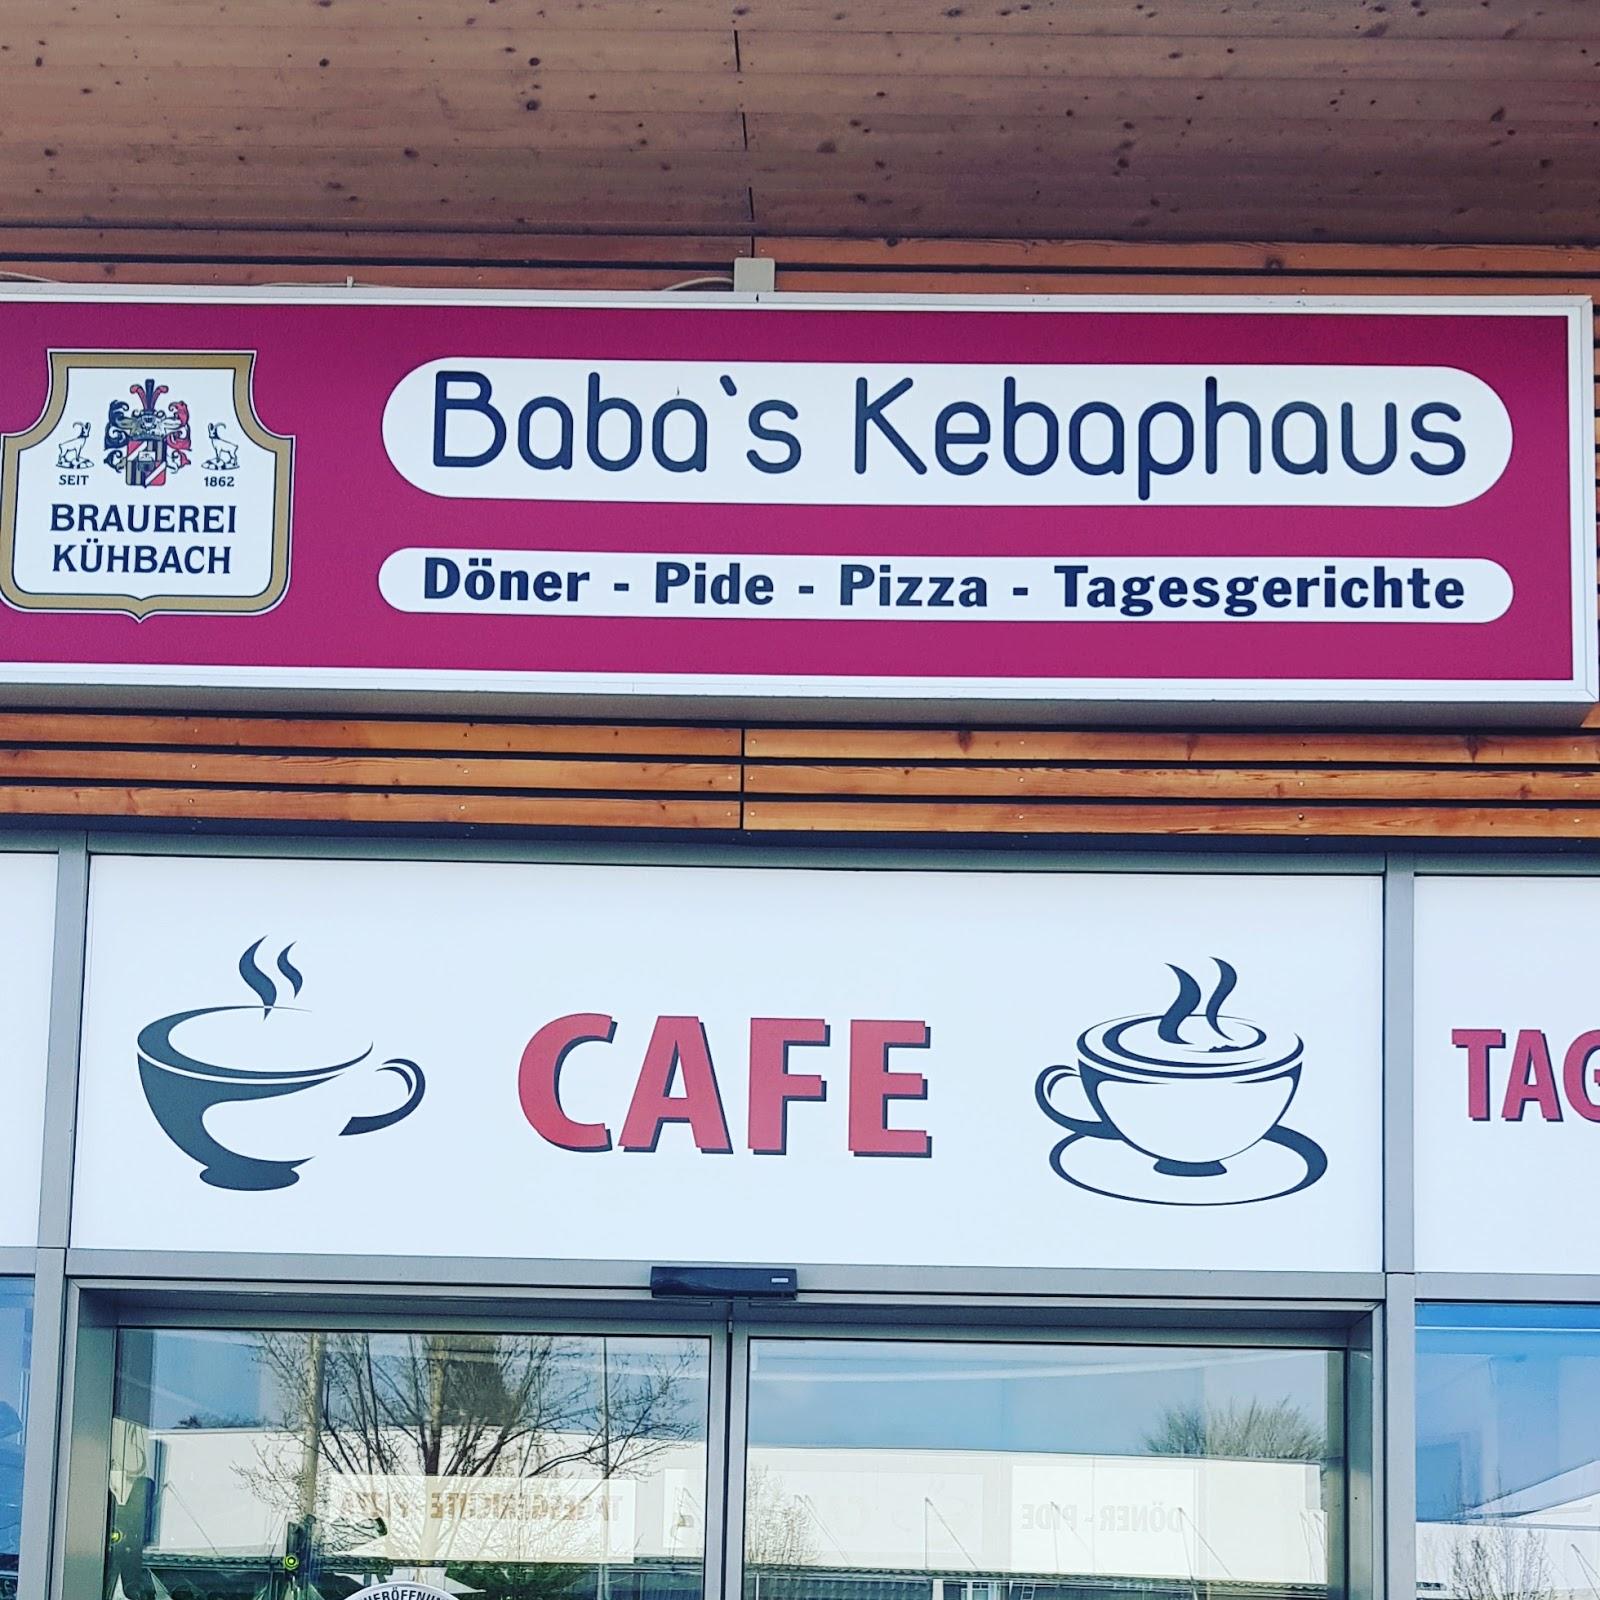 Restaurant "Baba